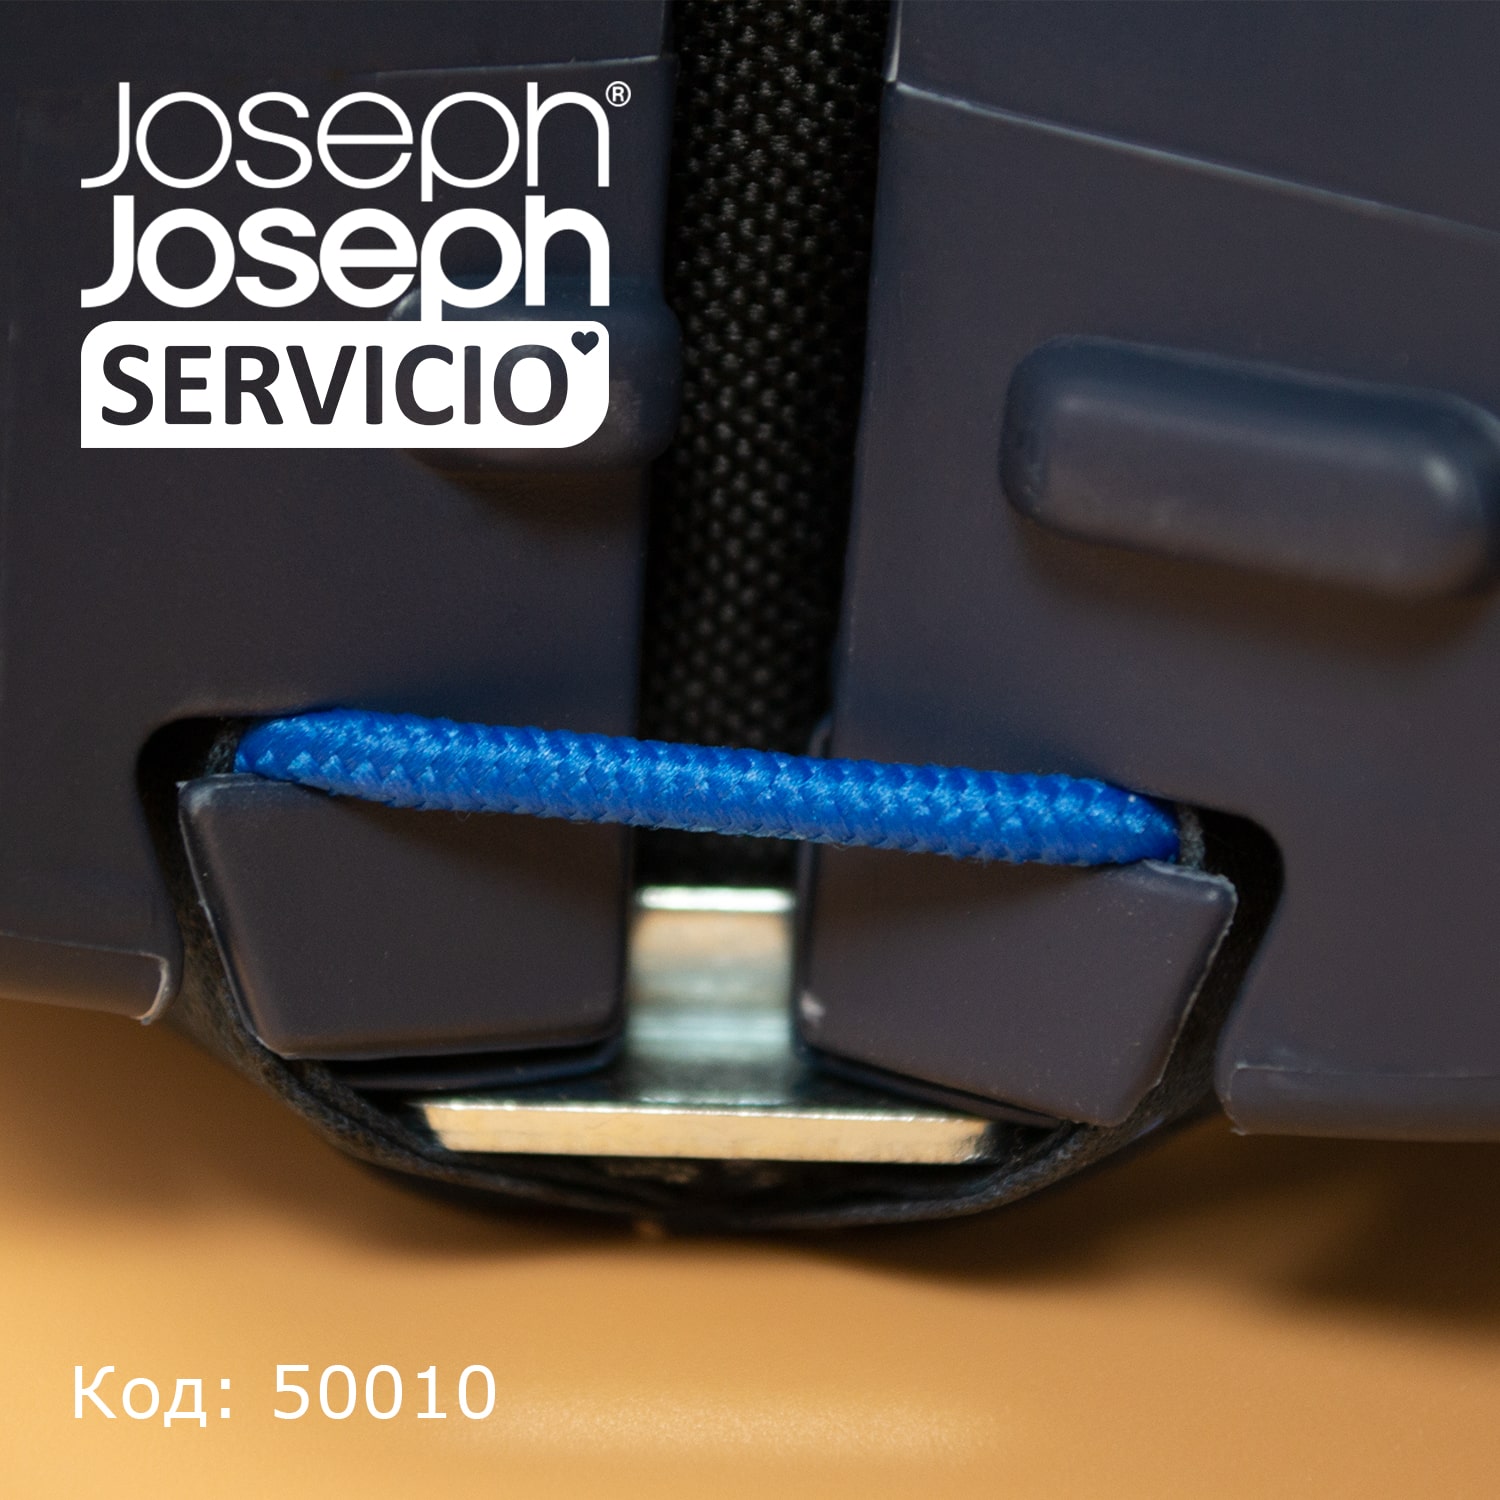 Joseph Joseph 50010